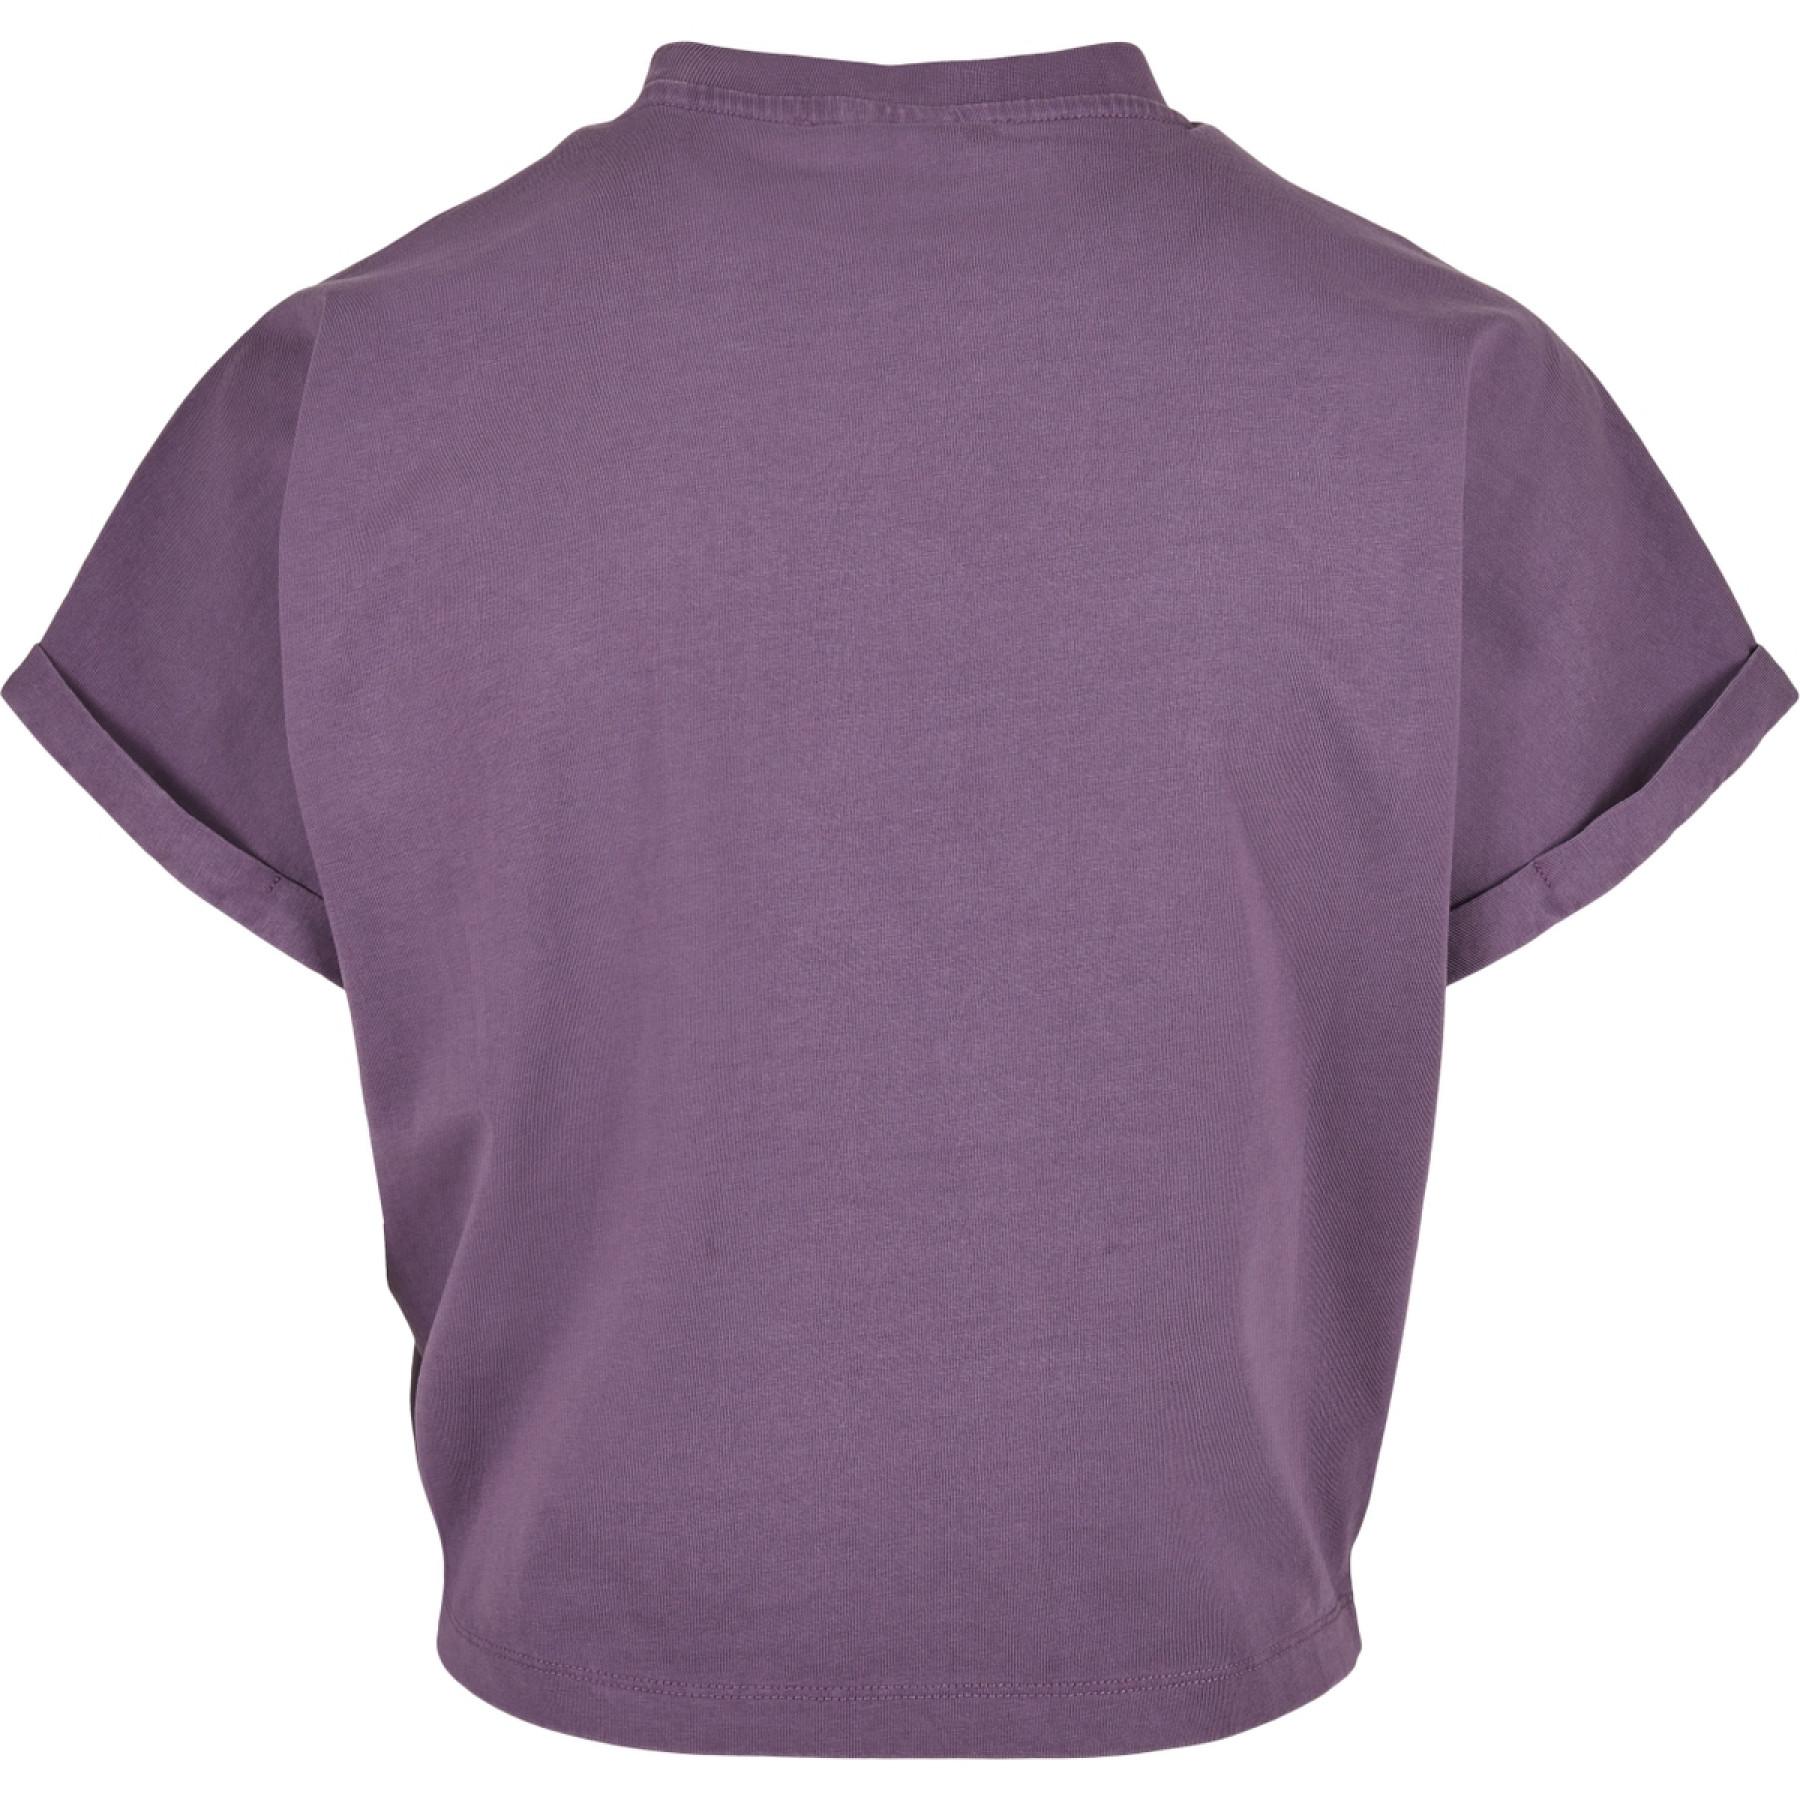 T-shirt mulher Urban Classics short pigment dye cortar-tamanhos grandes